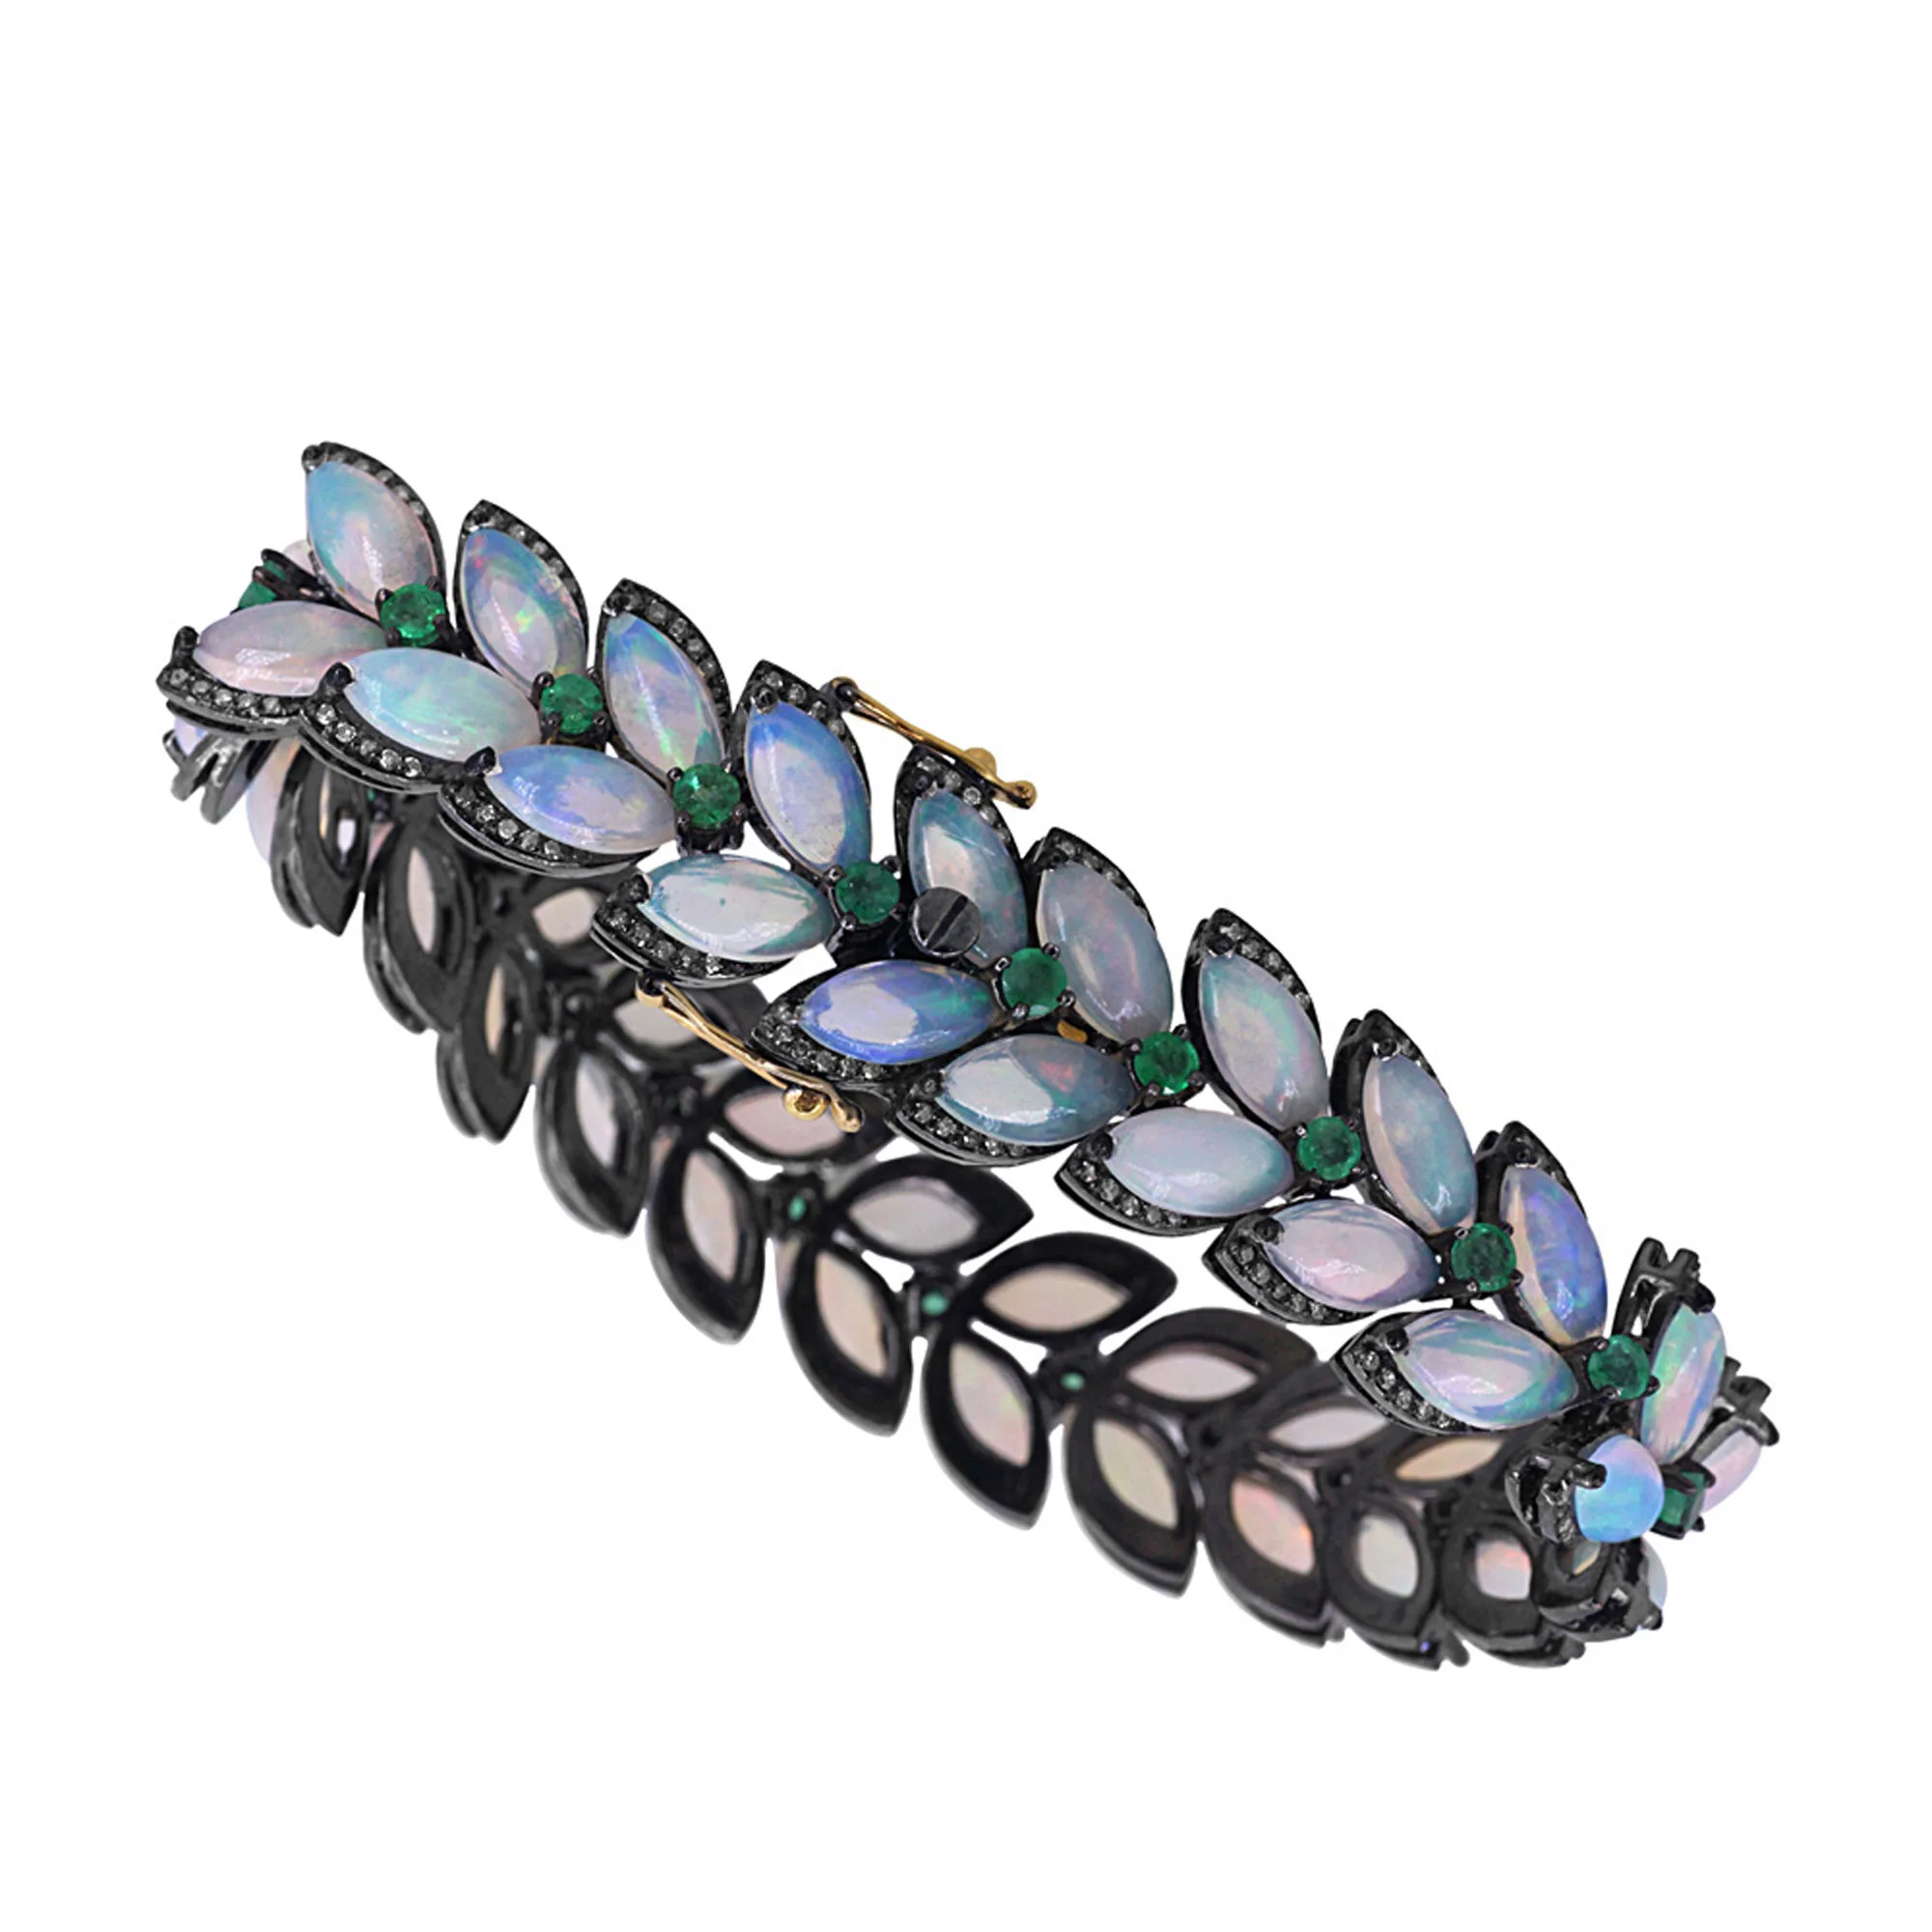 Genuine Diamond Emerald Gemstone 925 Sterling Silver Macrame Bracelet Jewelry